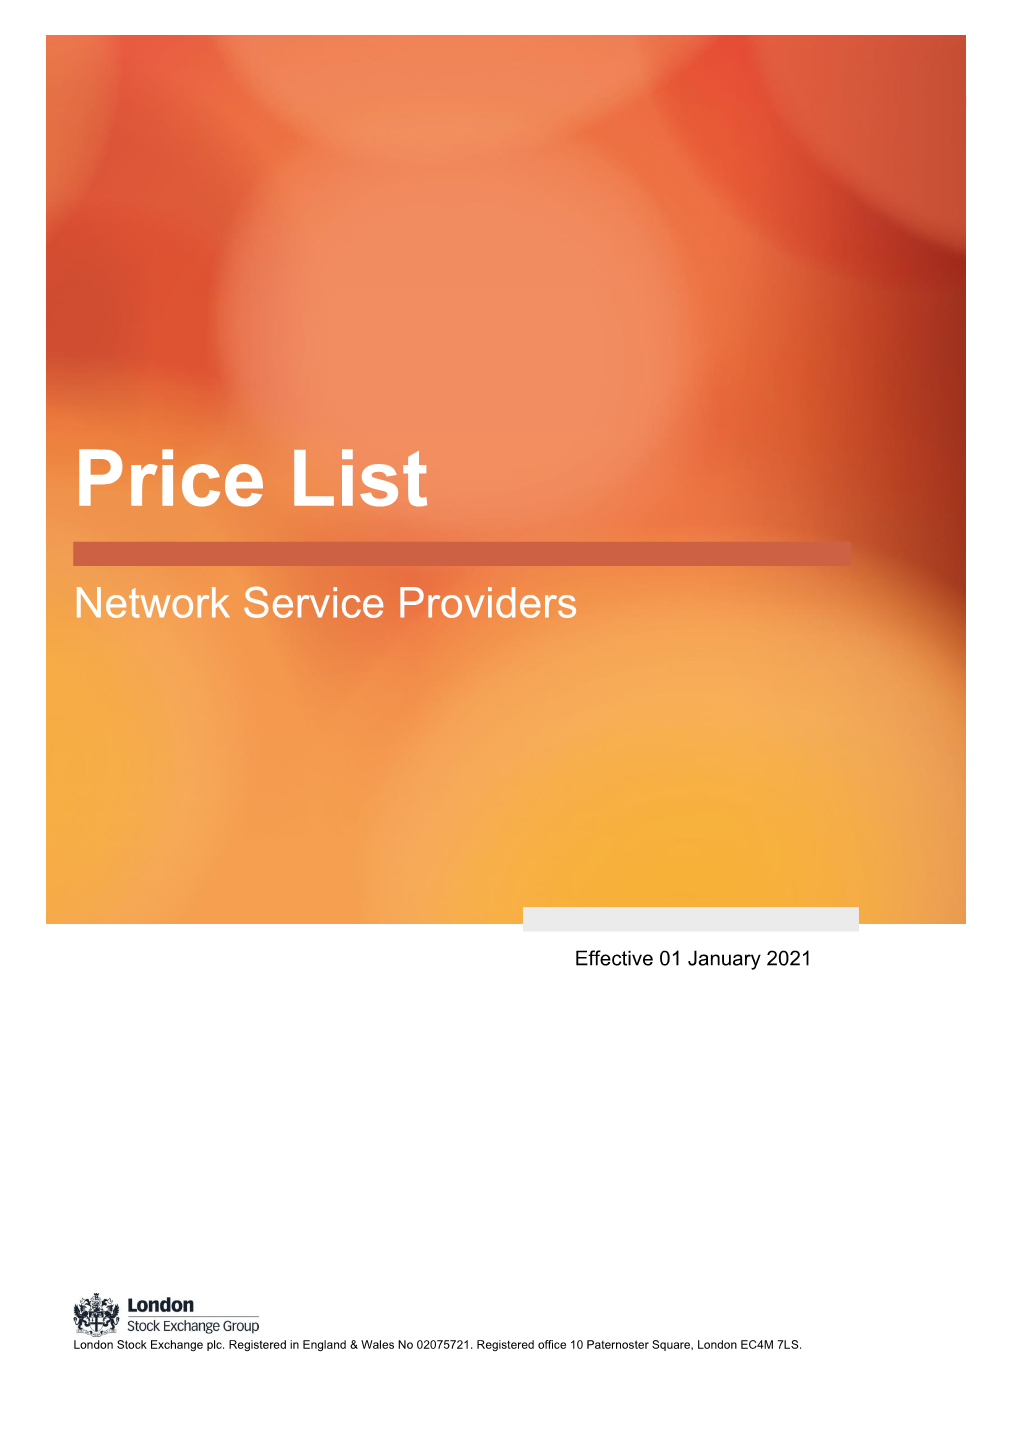 NSP Price List